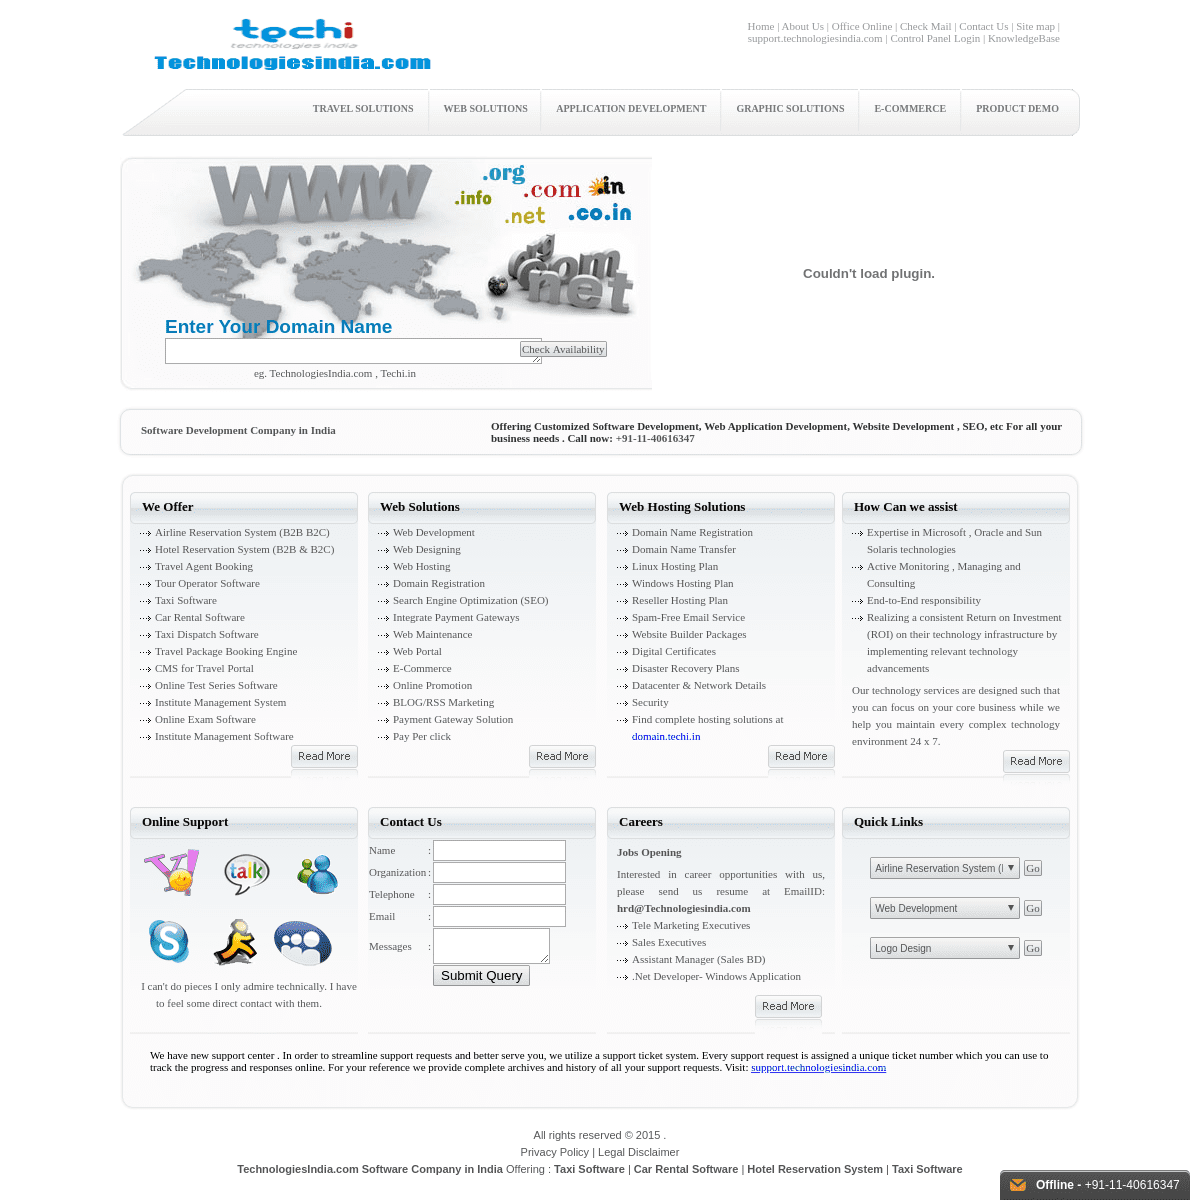 A complete backup of technologiesindia.com